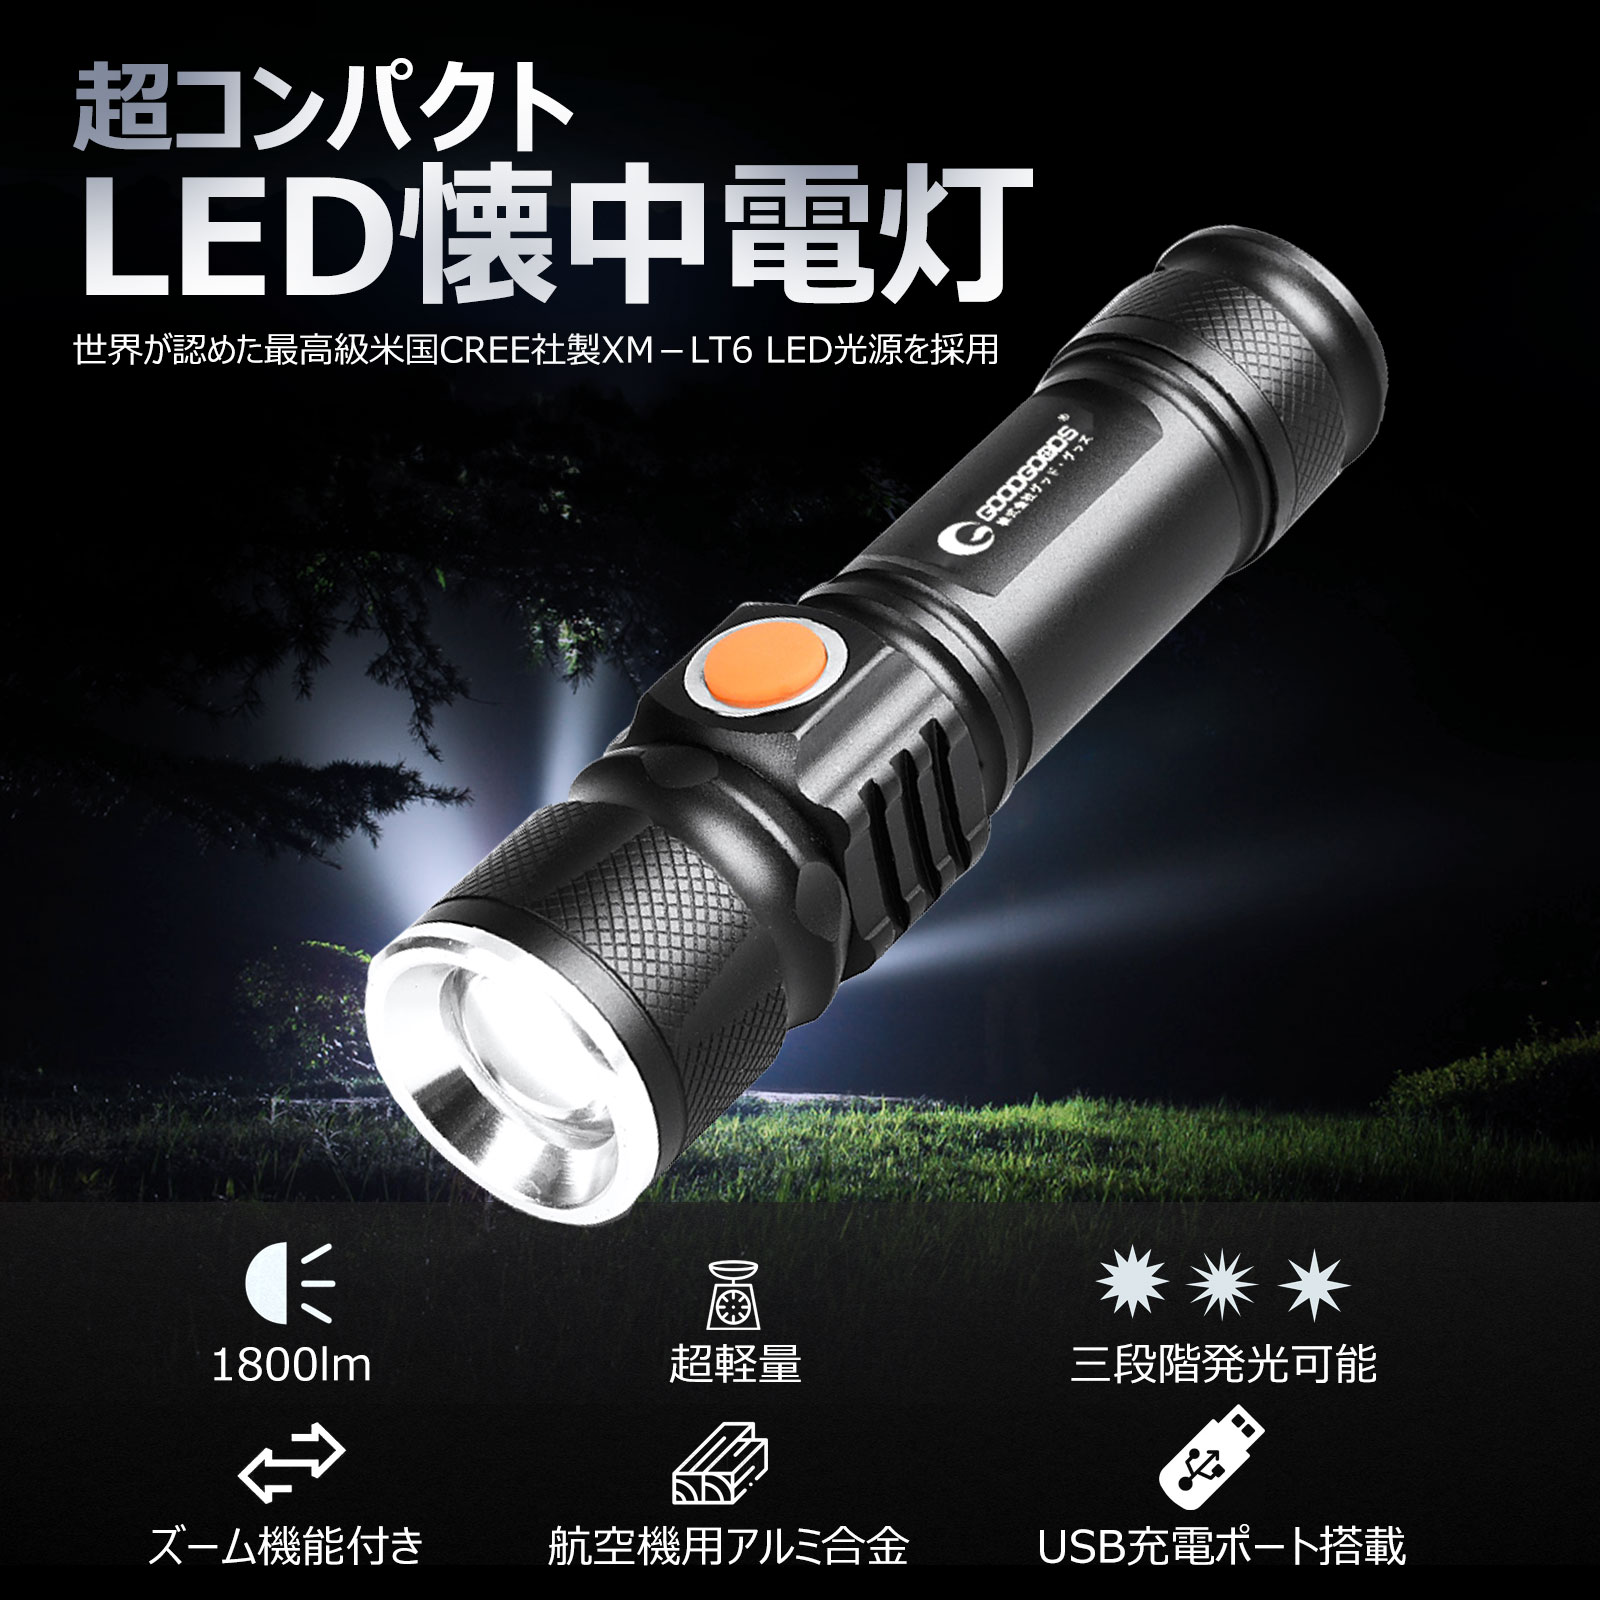  LED 懐中電灯 ハンディライト USB充電式 ズーム 4モード切替